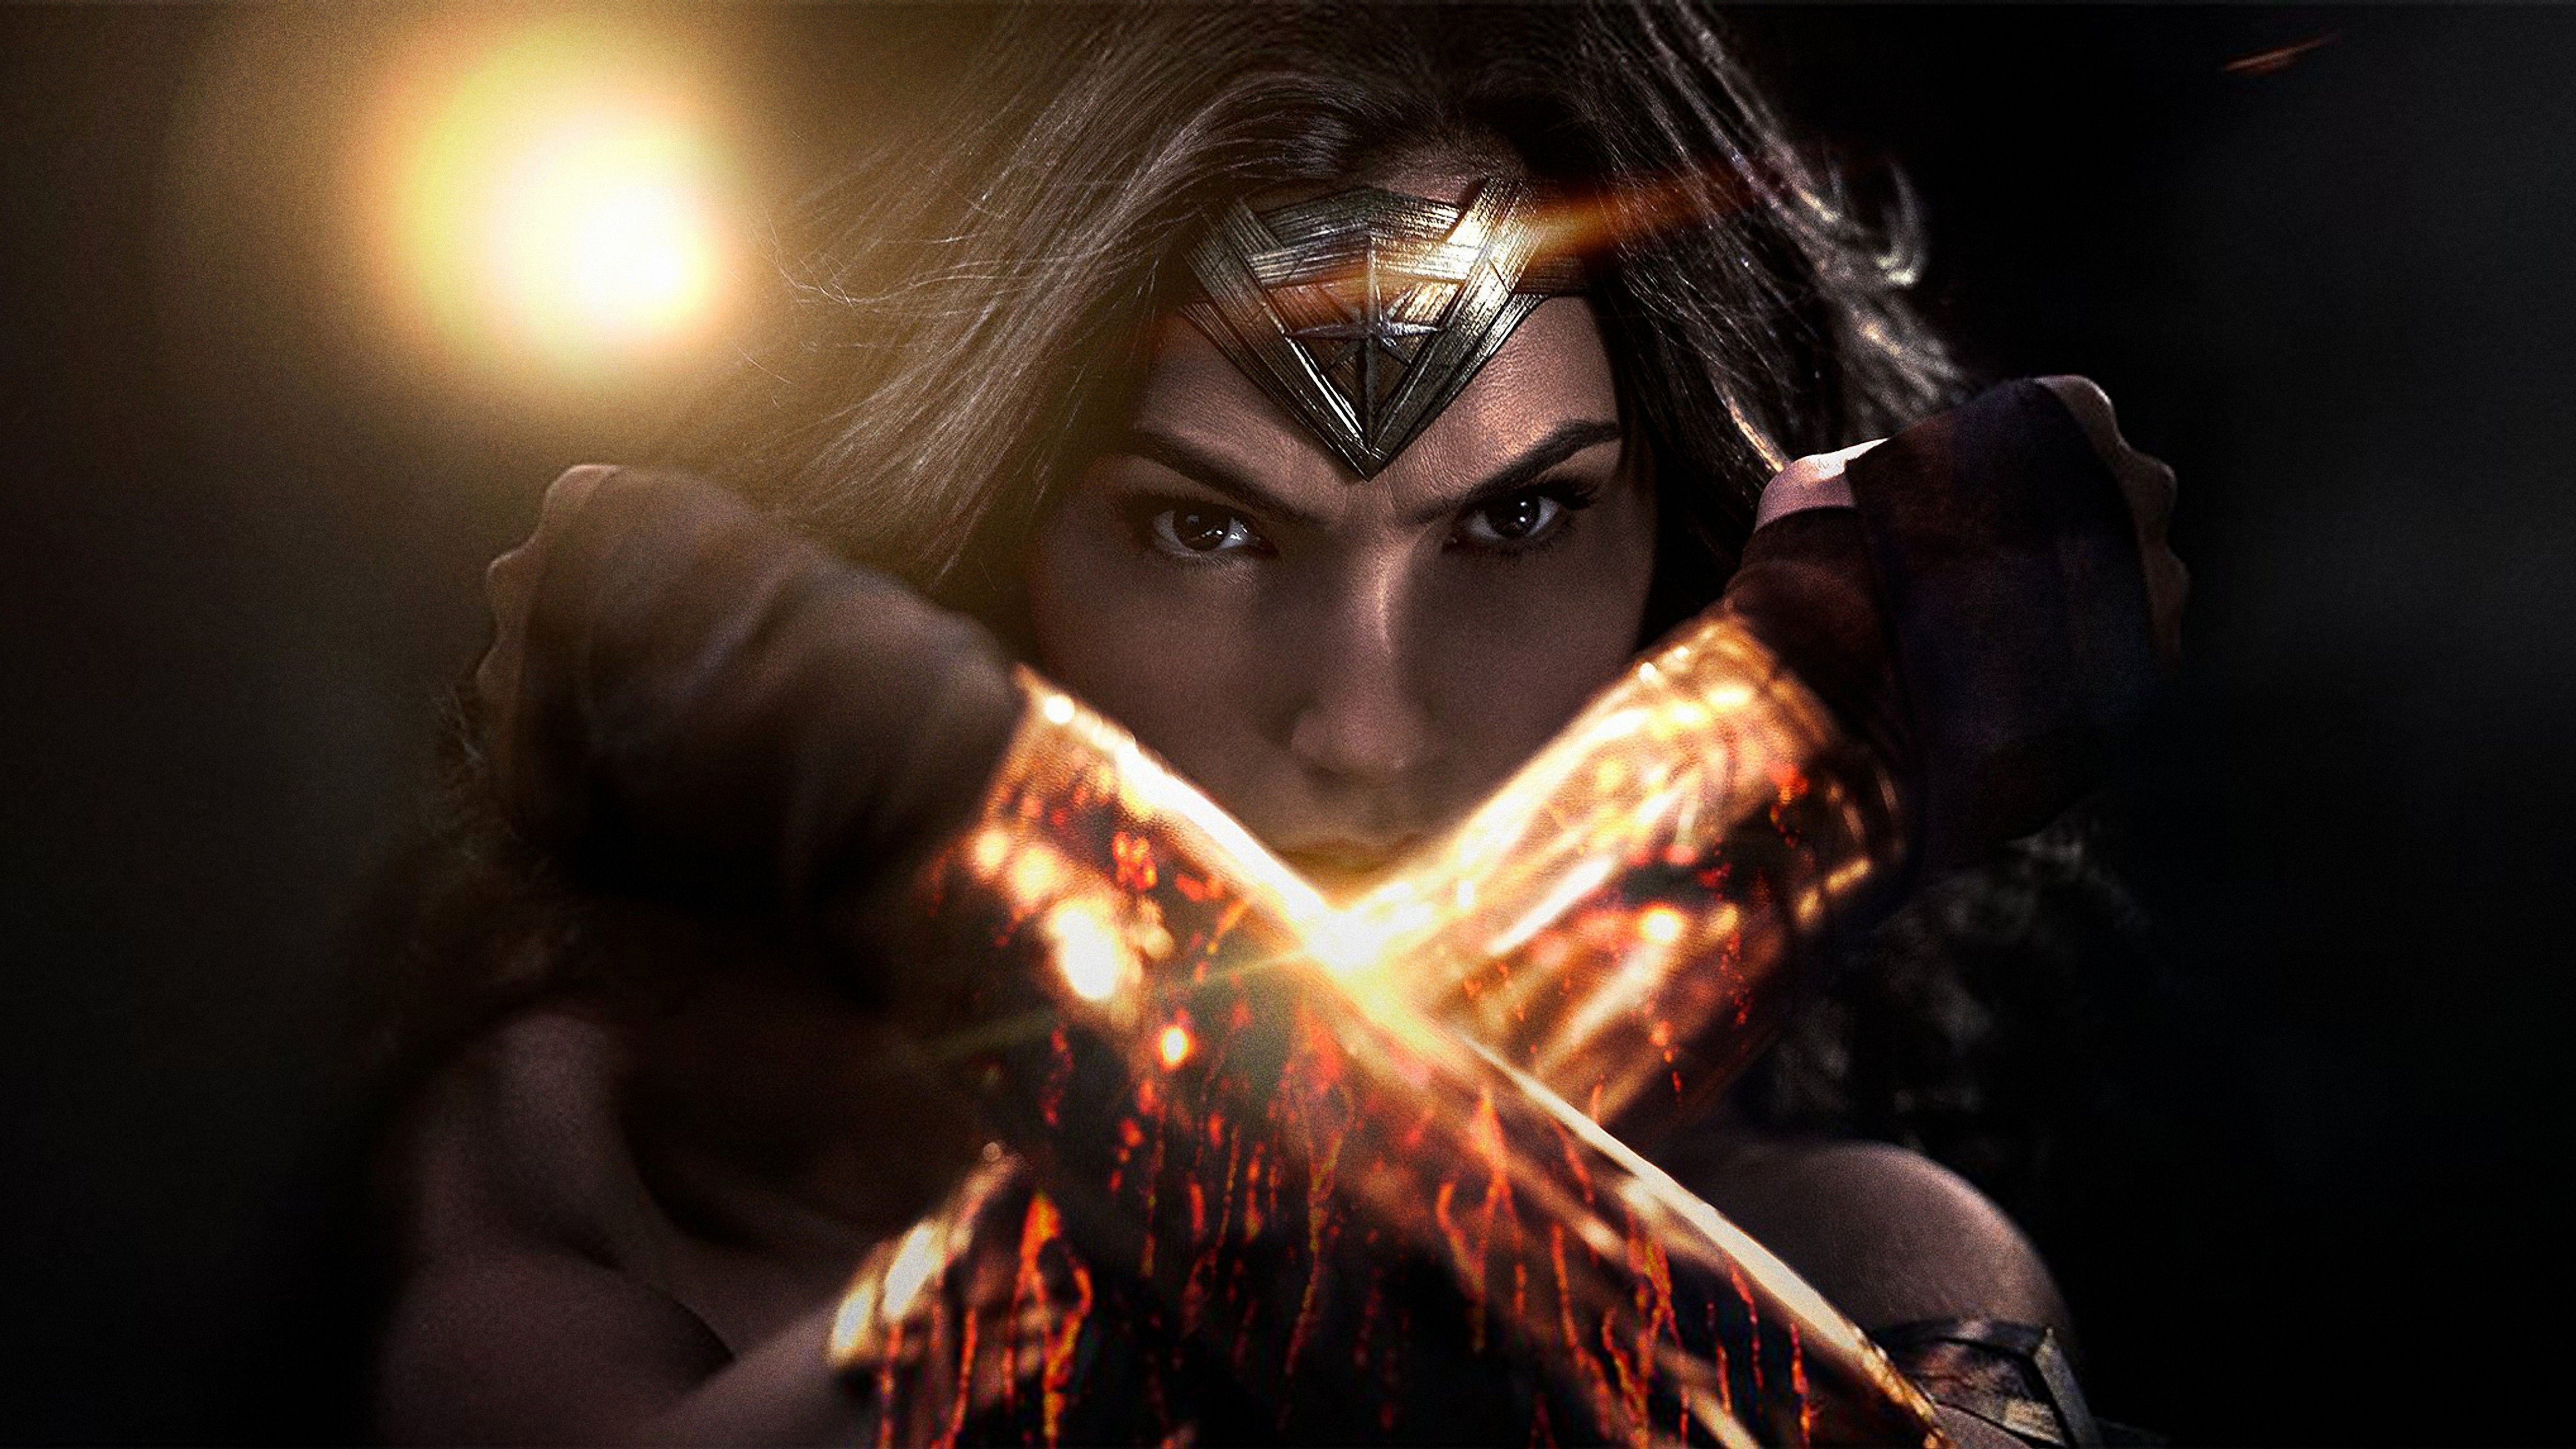 Wallpaper Wonder Woman, Batman v Superman, 5K, Movies